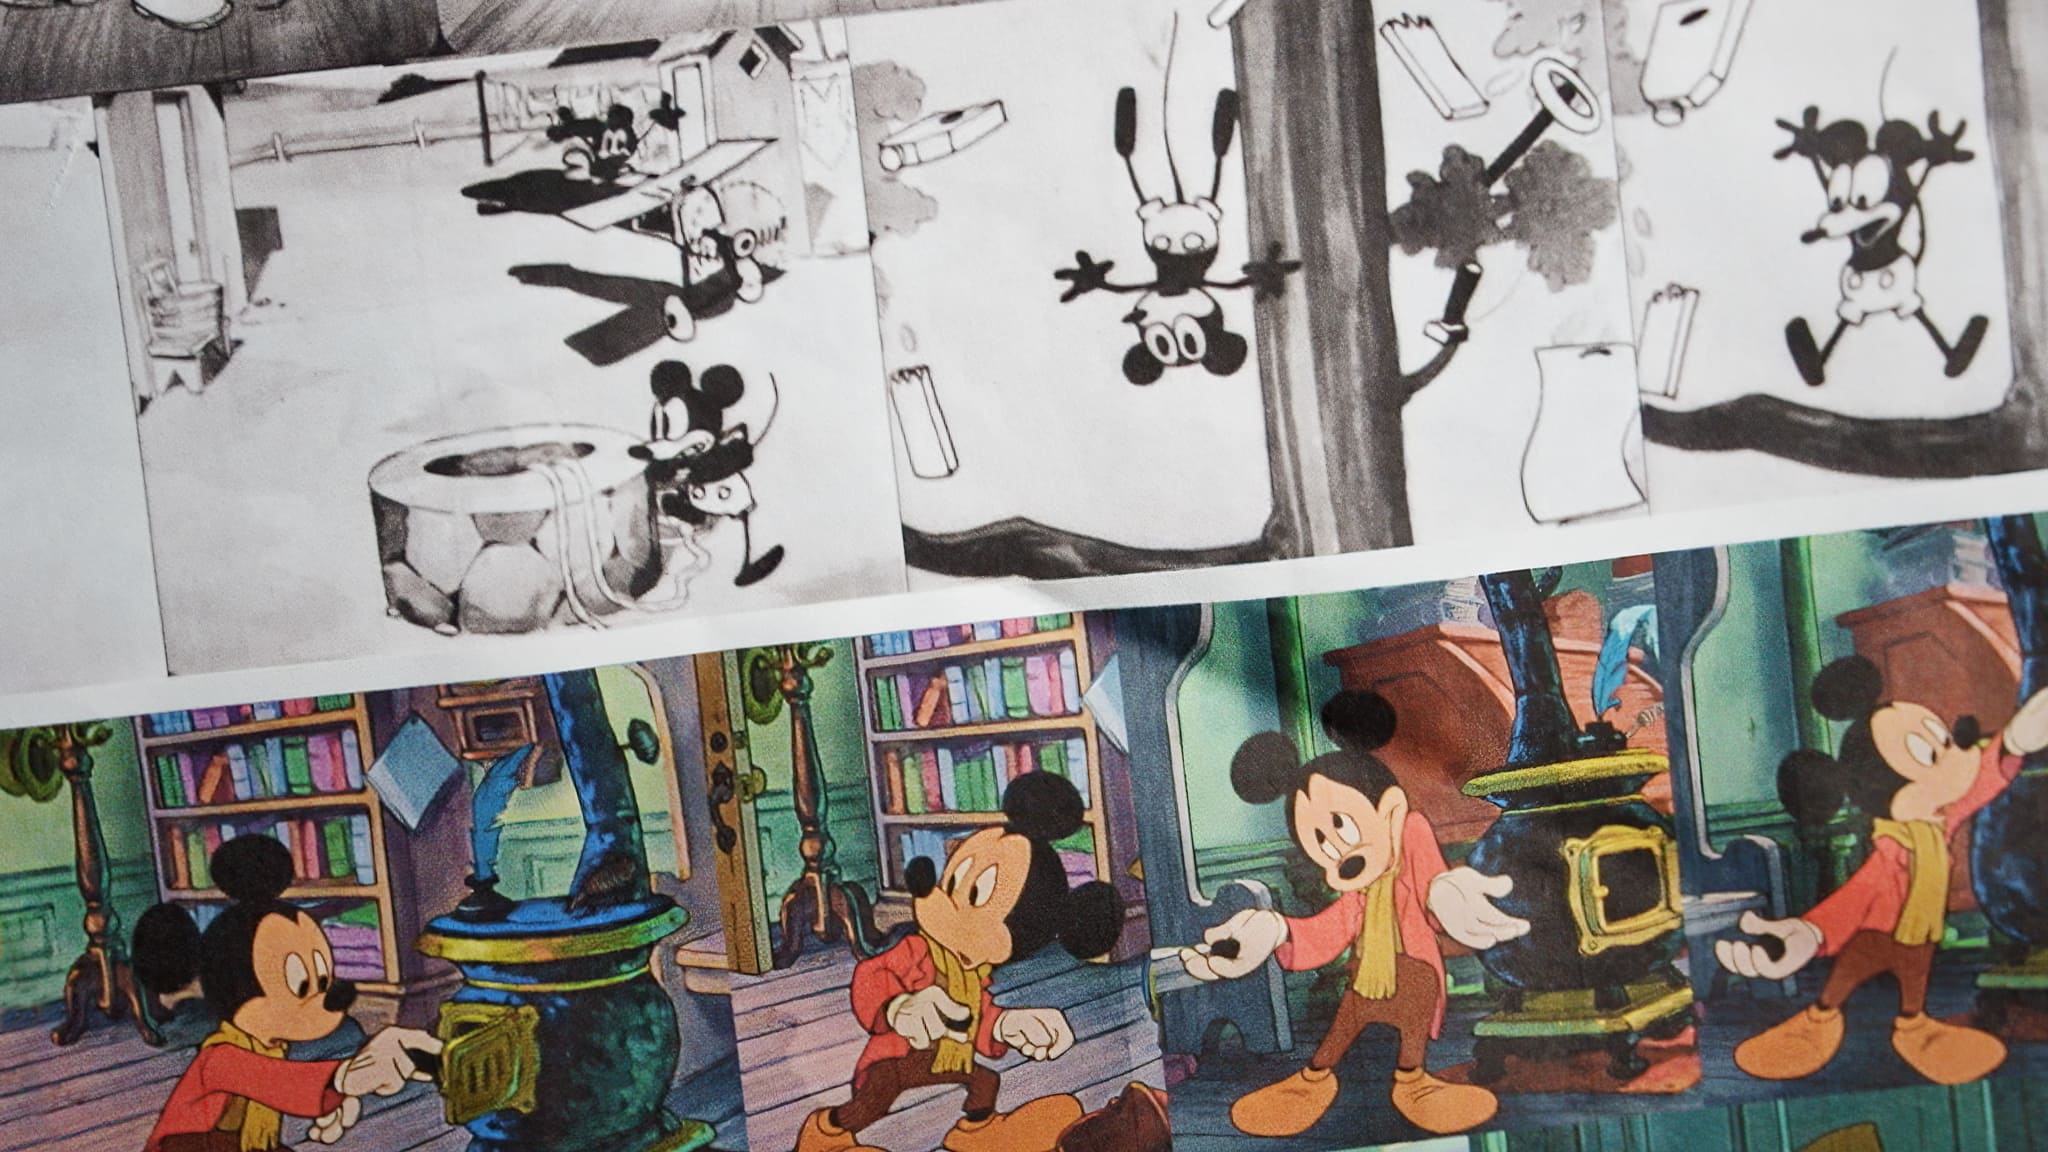 دانلود فیلم Mickey: The Story of a Mouse 2022